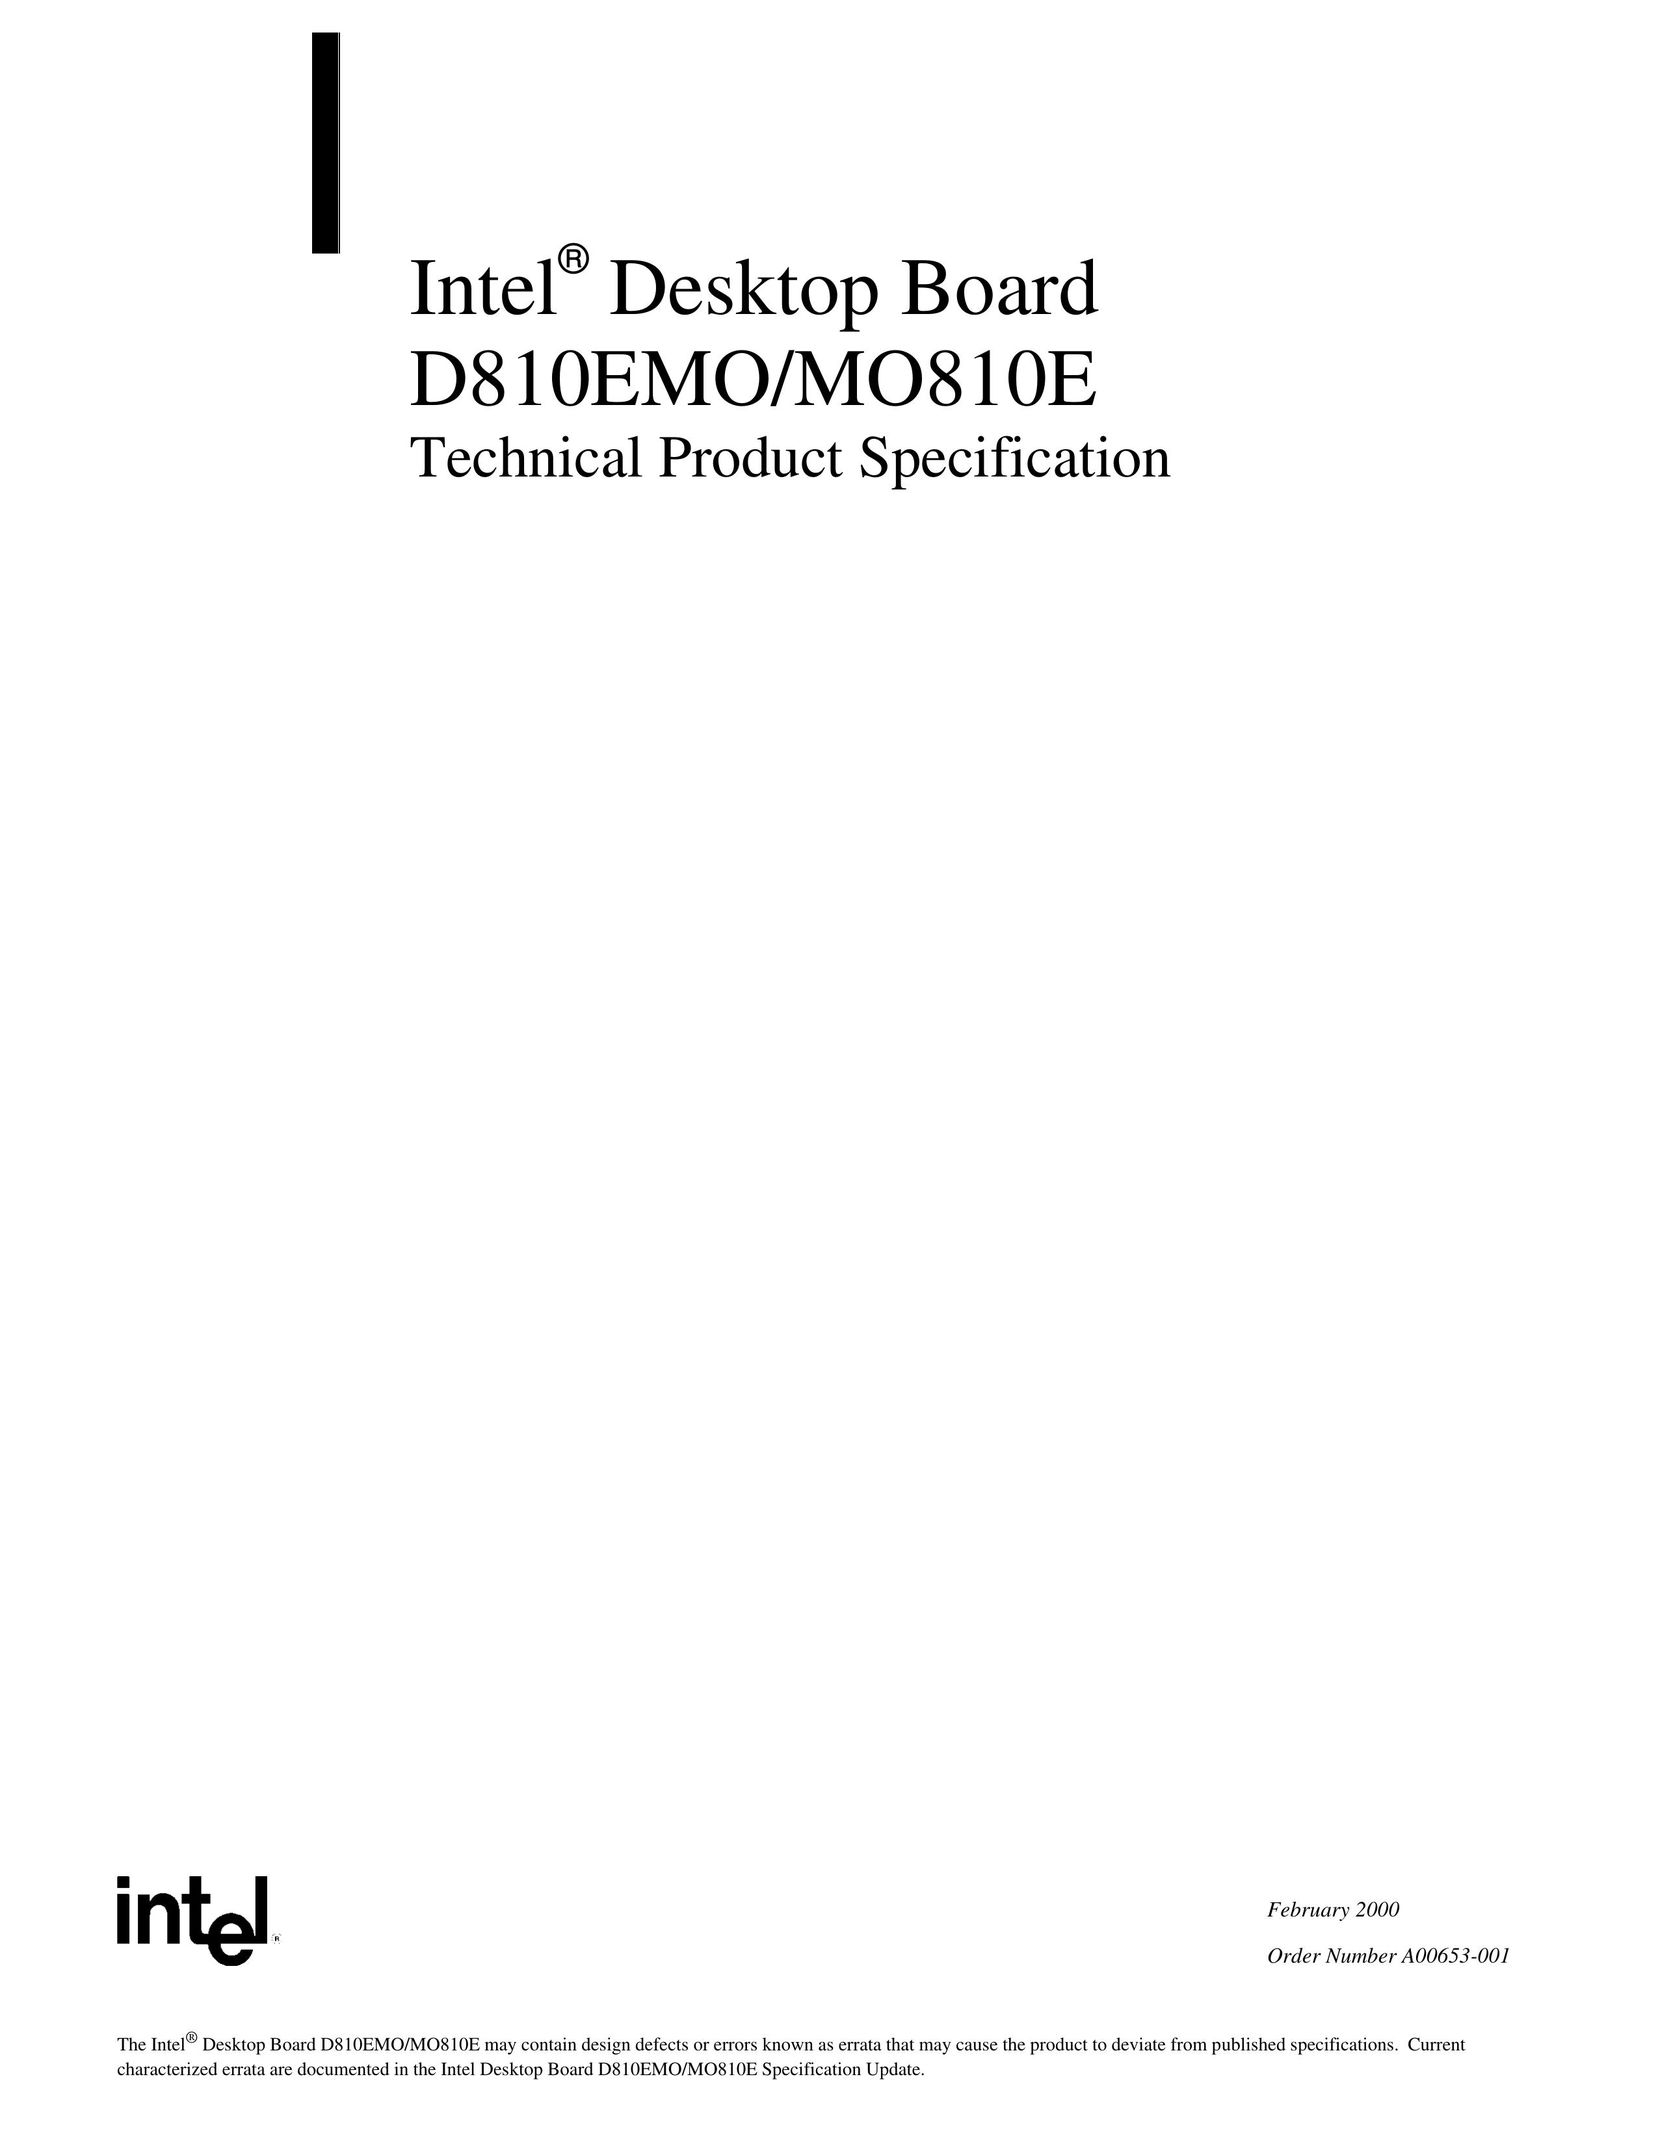 Intel D810EMO Personal Computer User Manual